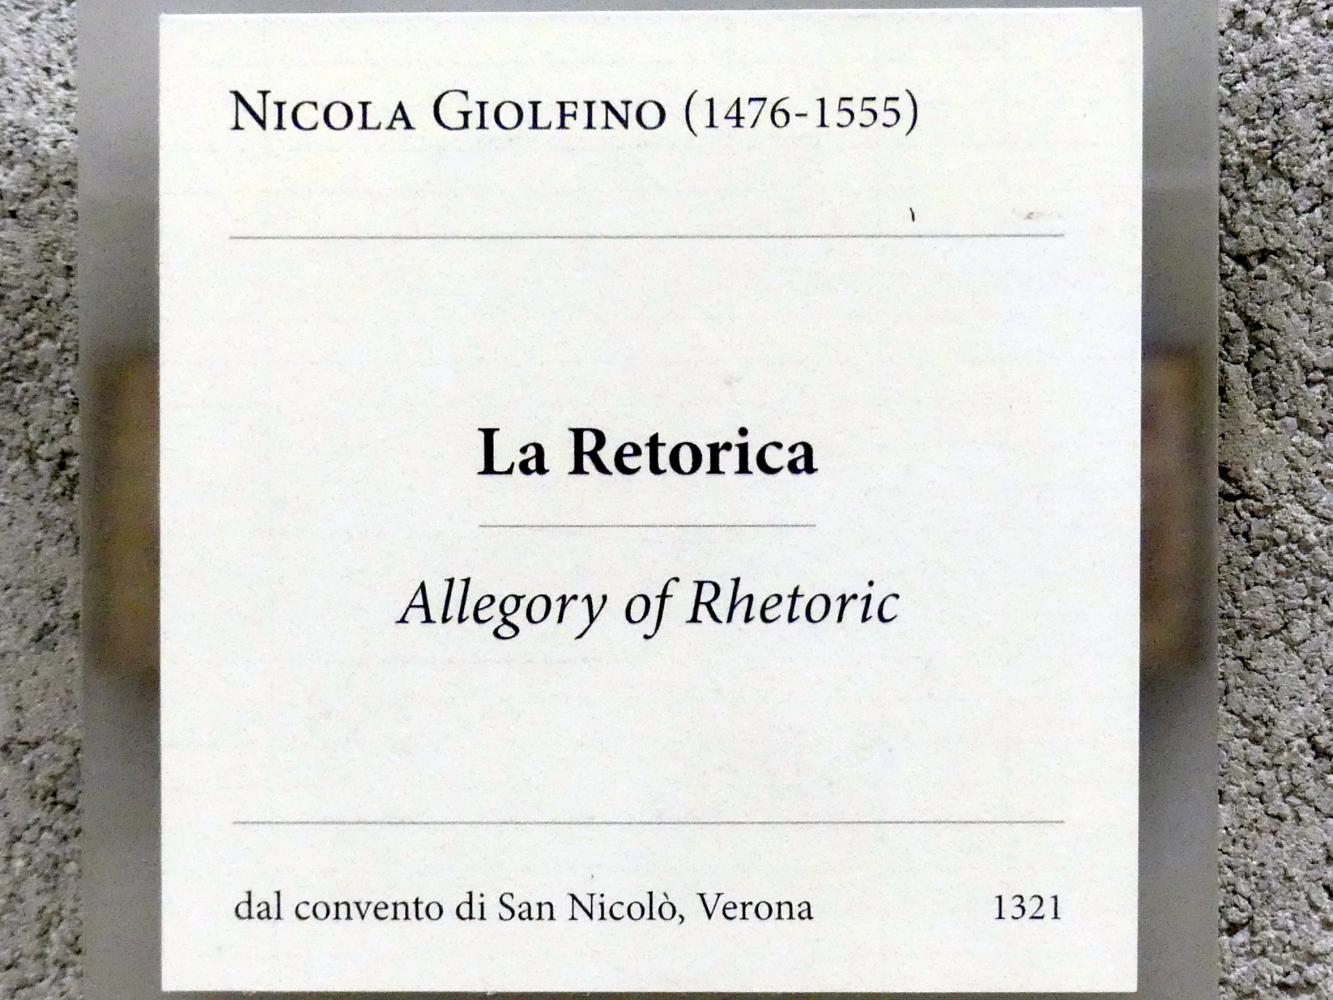 Nicola (Nicolò) Giolfino (1500–1527), Allegorie der Rhetorik, Verona, convento di San Nicolò, jetzt Verona, Museo di Castelvecchio, Saal 17, Undatiert, Bild 2/2